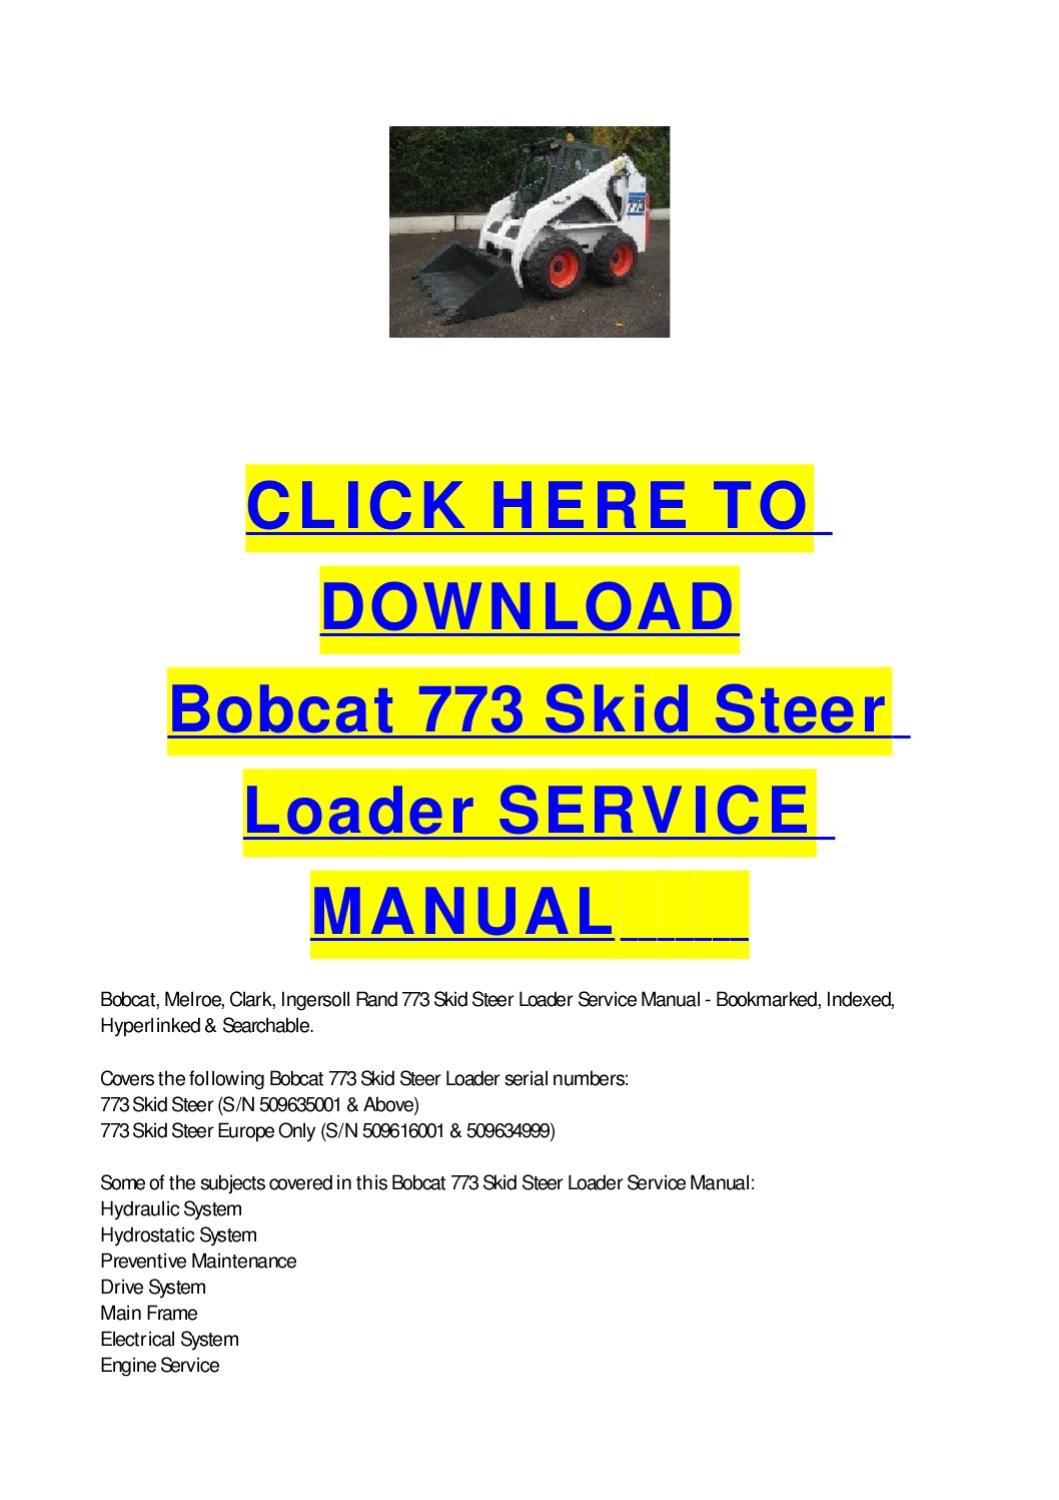 Bobcat 773 service manual download